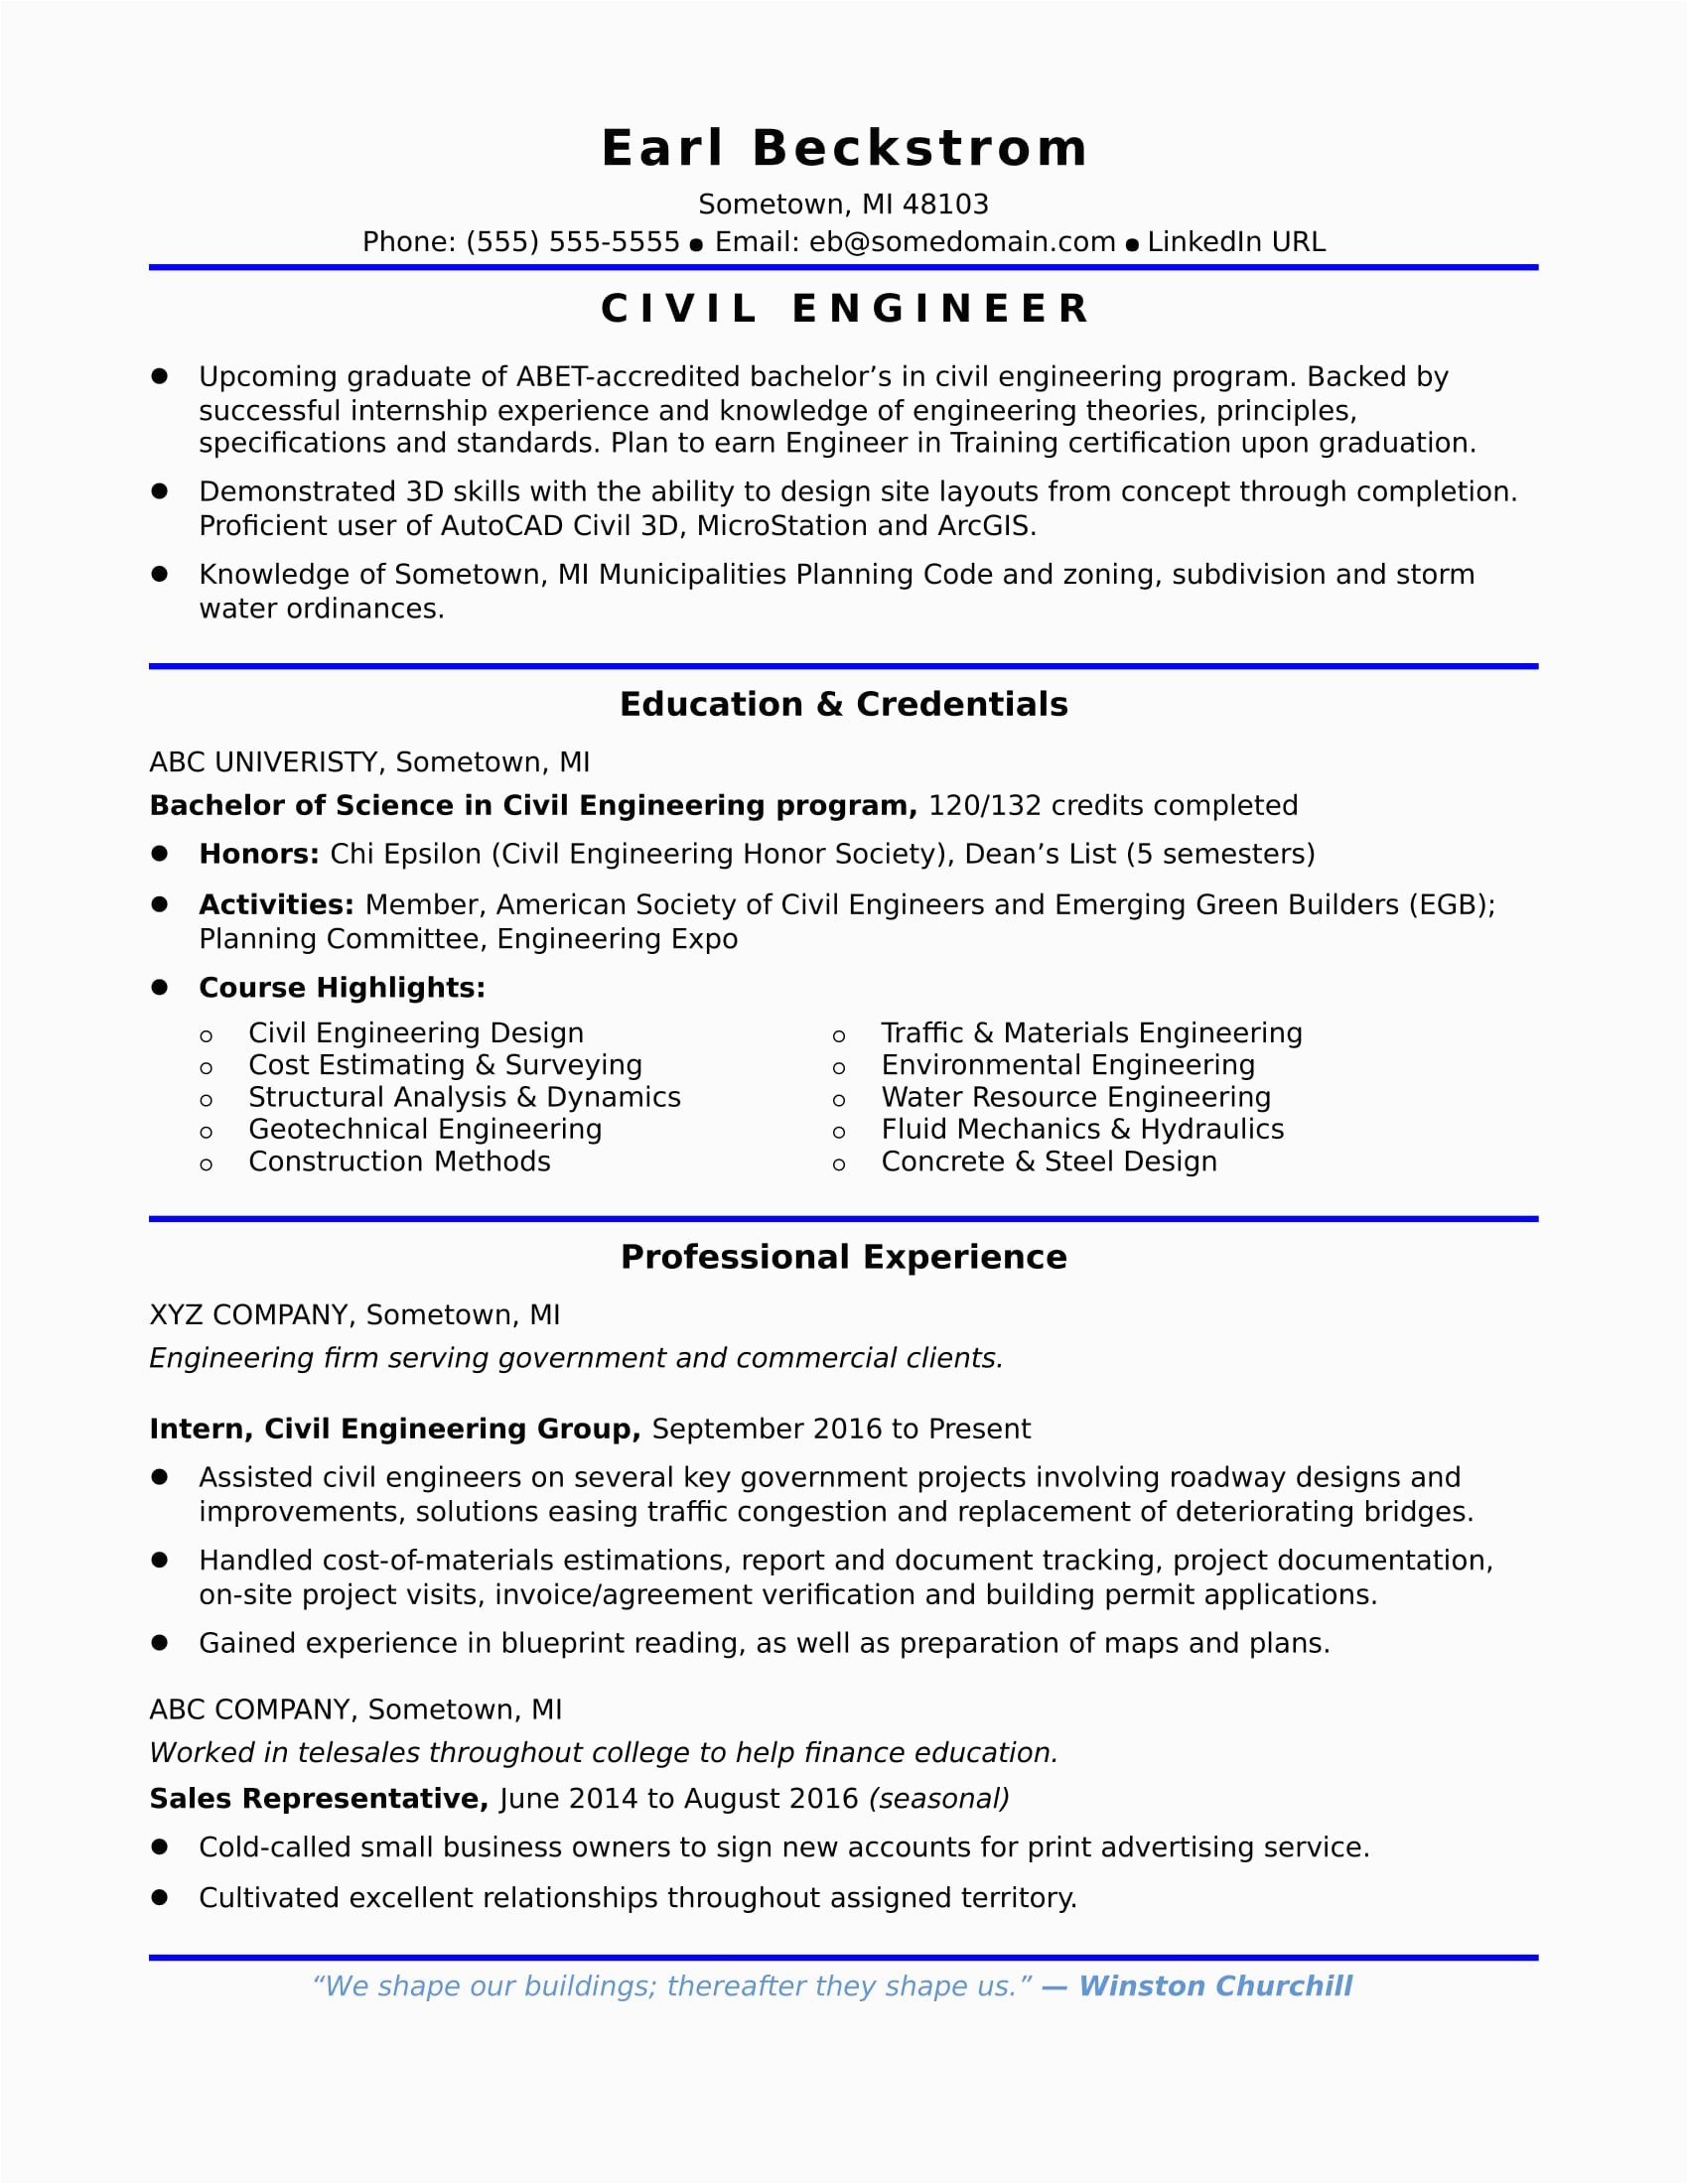 Resume Sample for Ojt Civil Engineering Entry Level Civil Engineering Resume